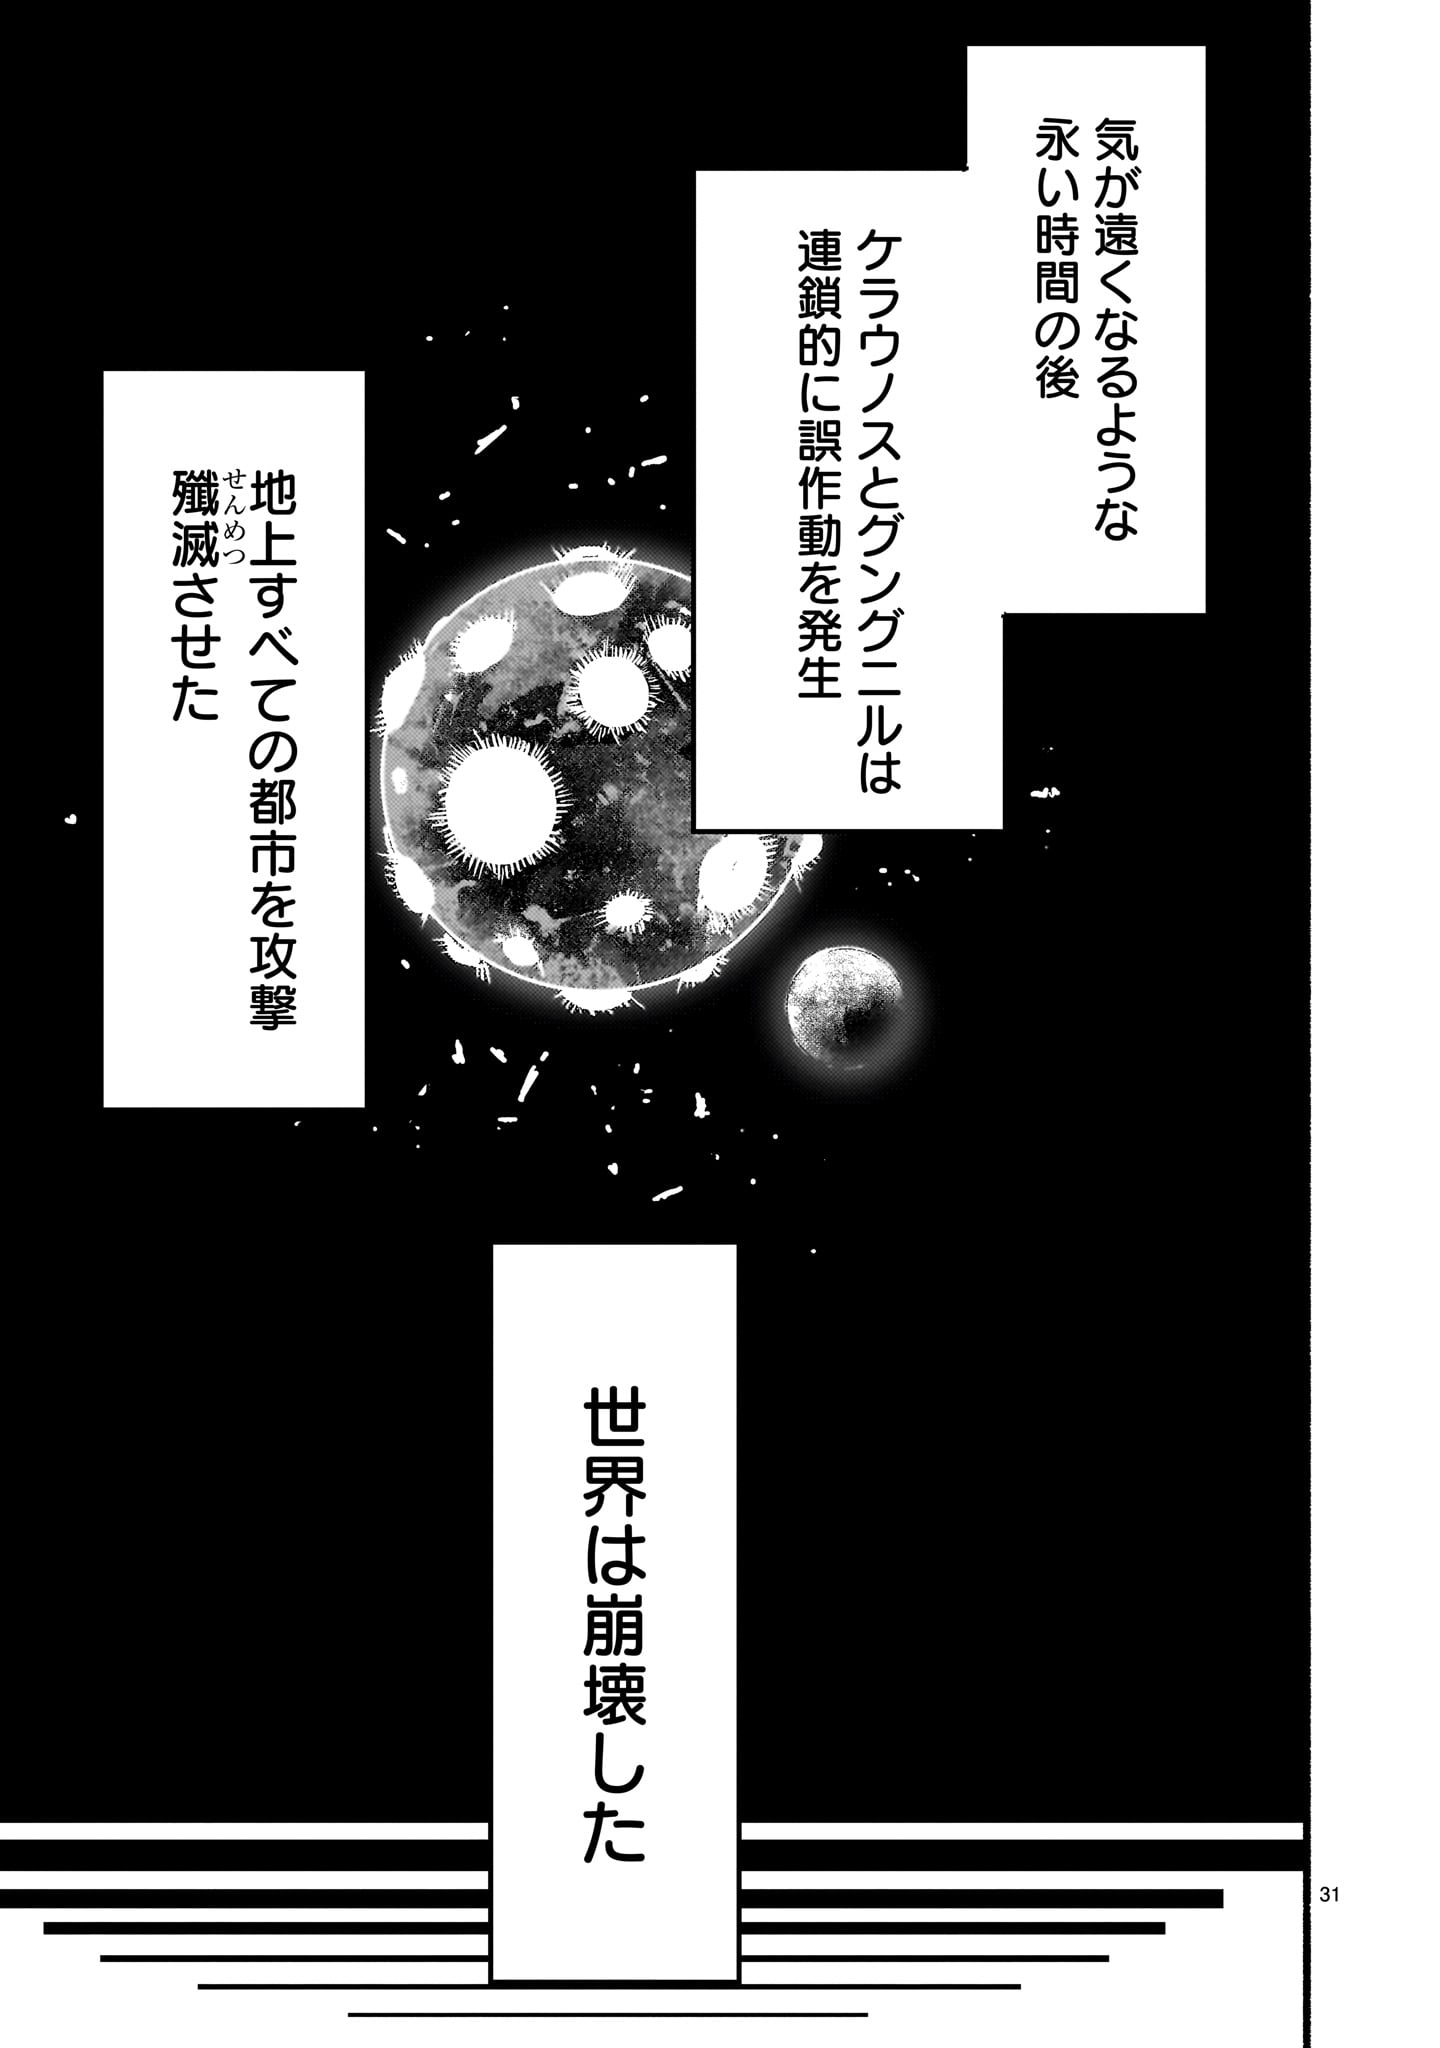 Kaminaki Sekai no Kamisama Katsudou - Chapter 51 - Page 31